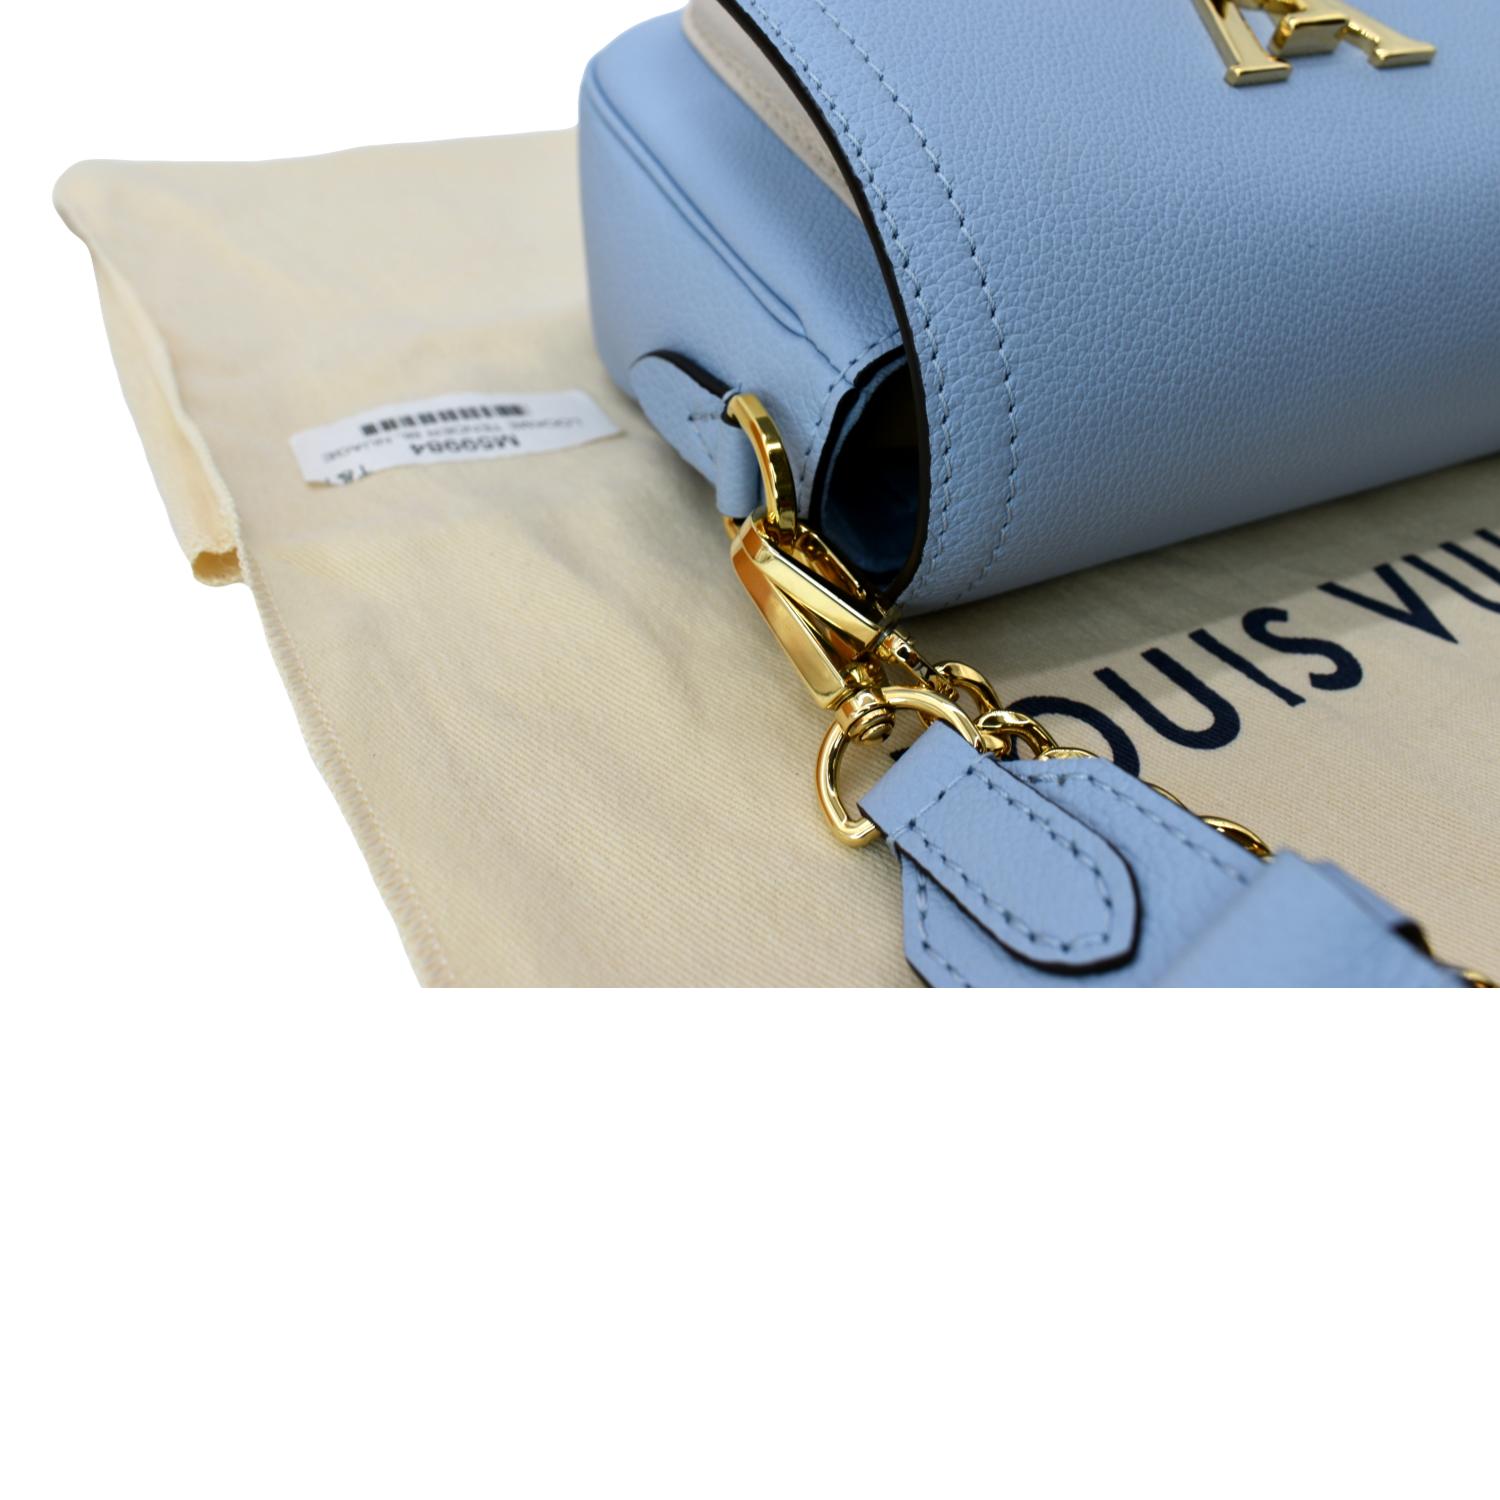 Louis Vuitton® Lockme Tender  Louis vuitton, Bags, Black handbags